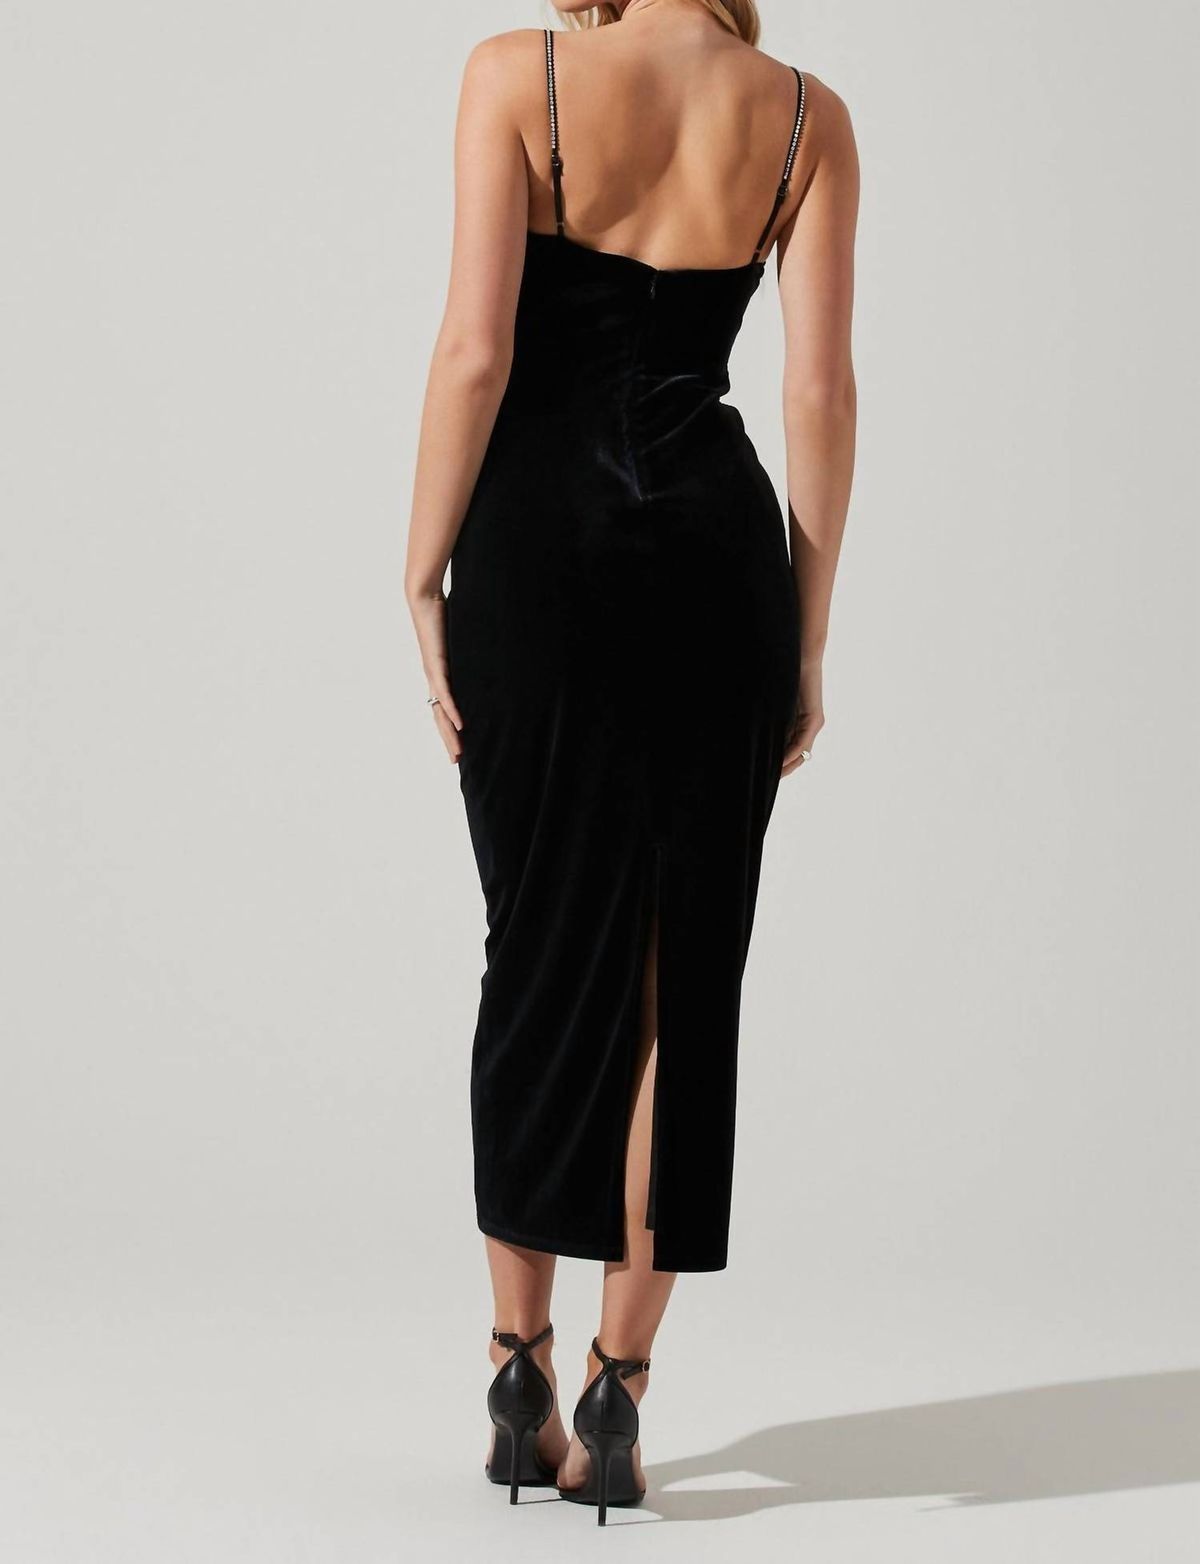 Style 1-3483130304-3236 ASTR Size S Velvet Black Cocktail Dress on Queenly